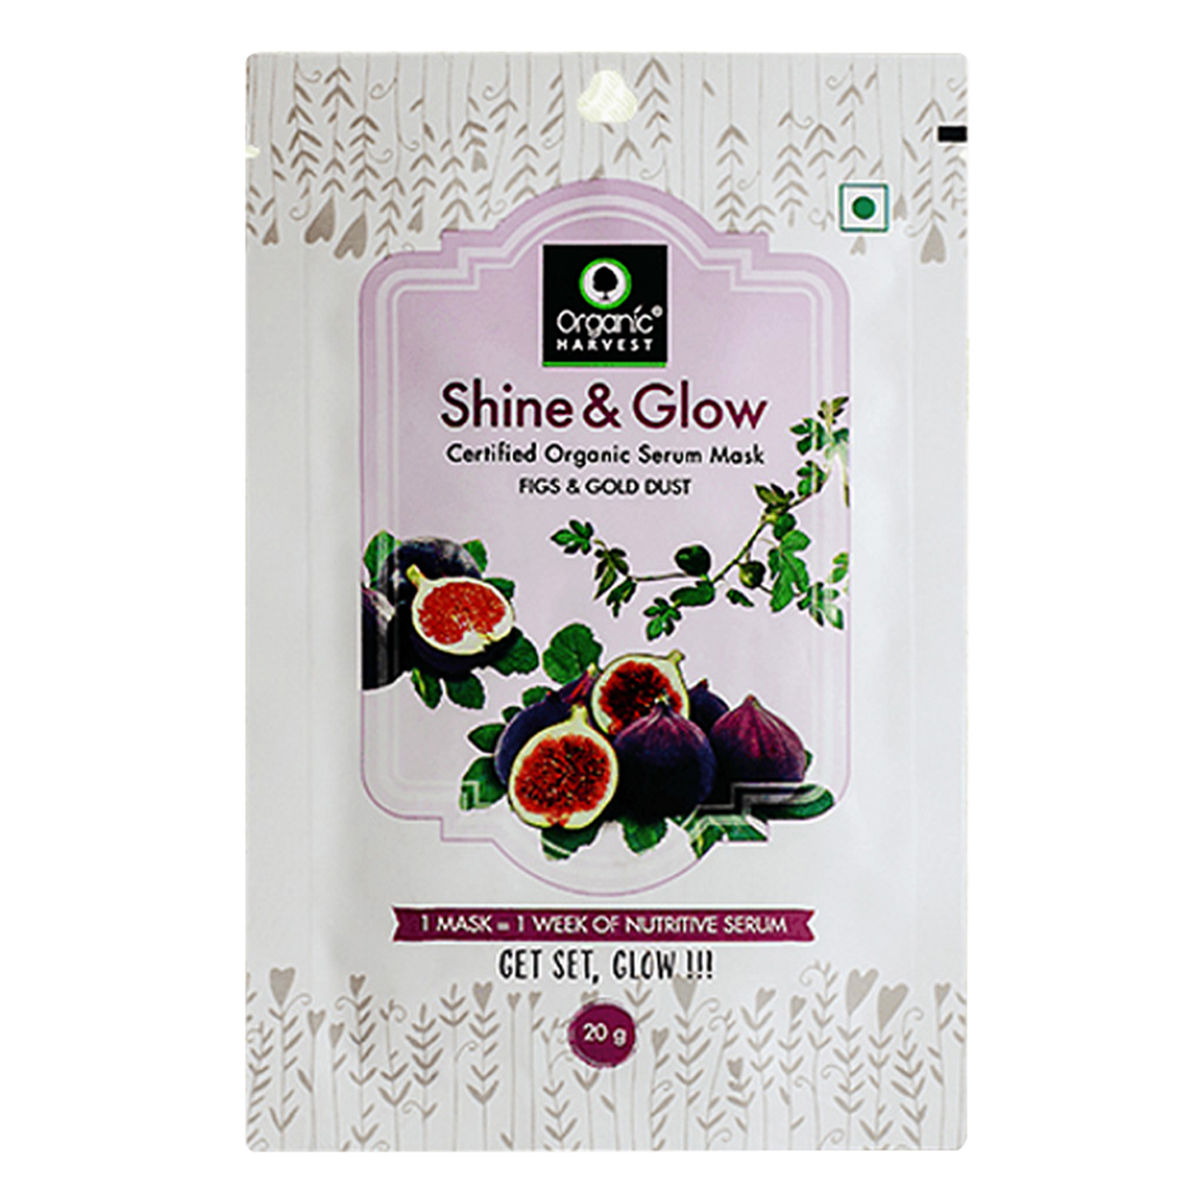 Buy Organic Harvest Shine and Glow Sheet Mask, 20 gm Online